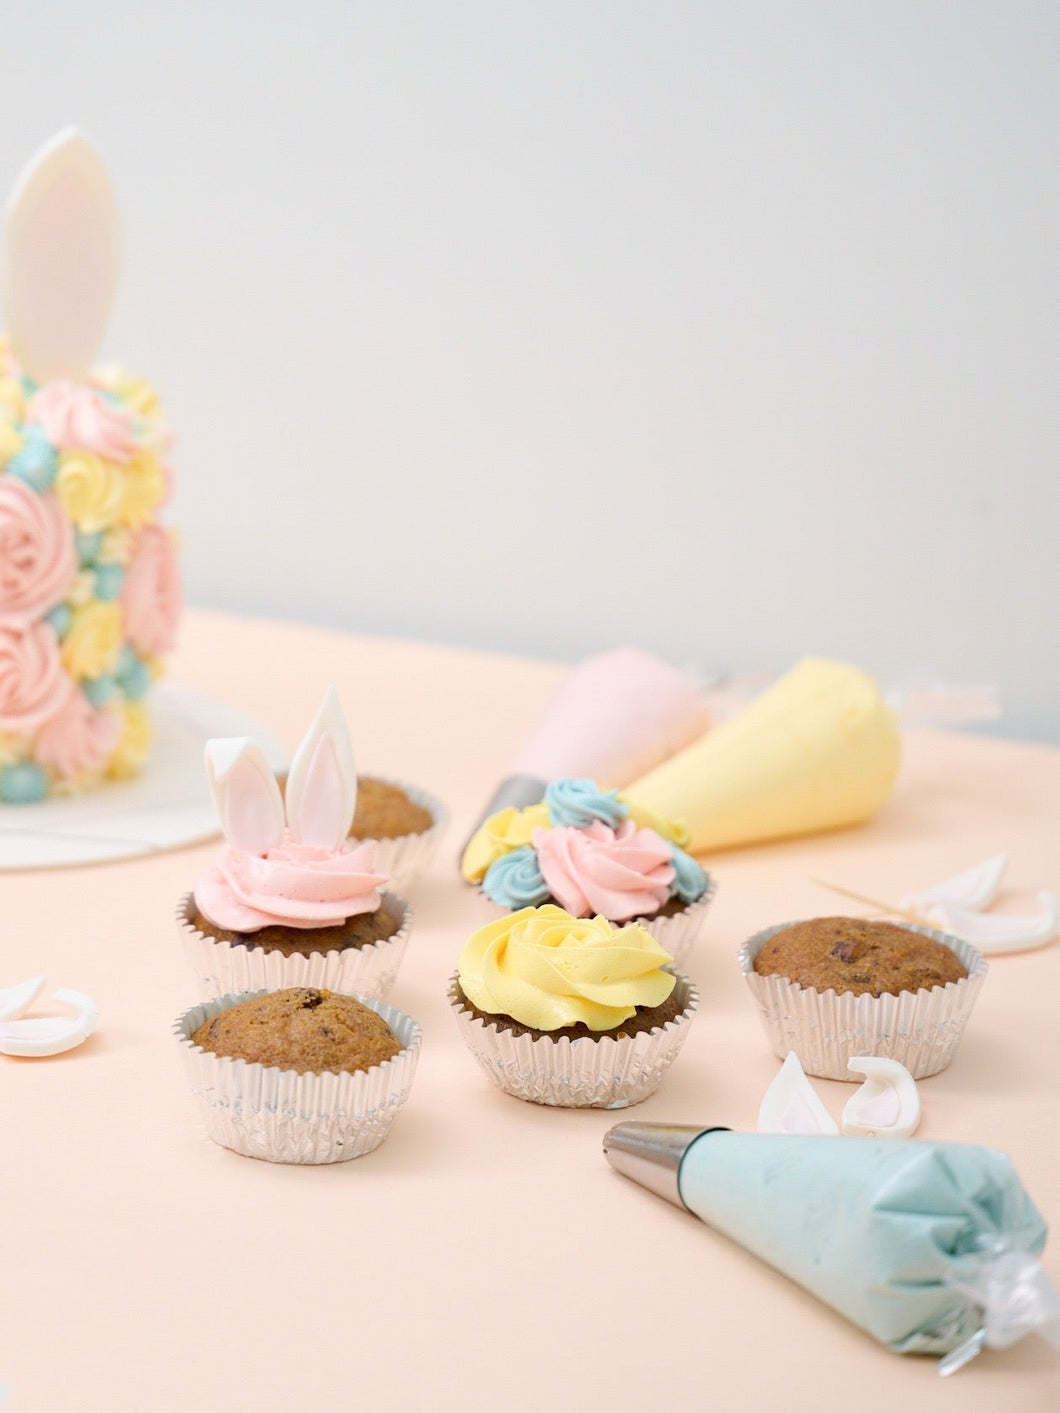 Bunny Cupcakes